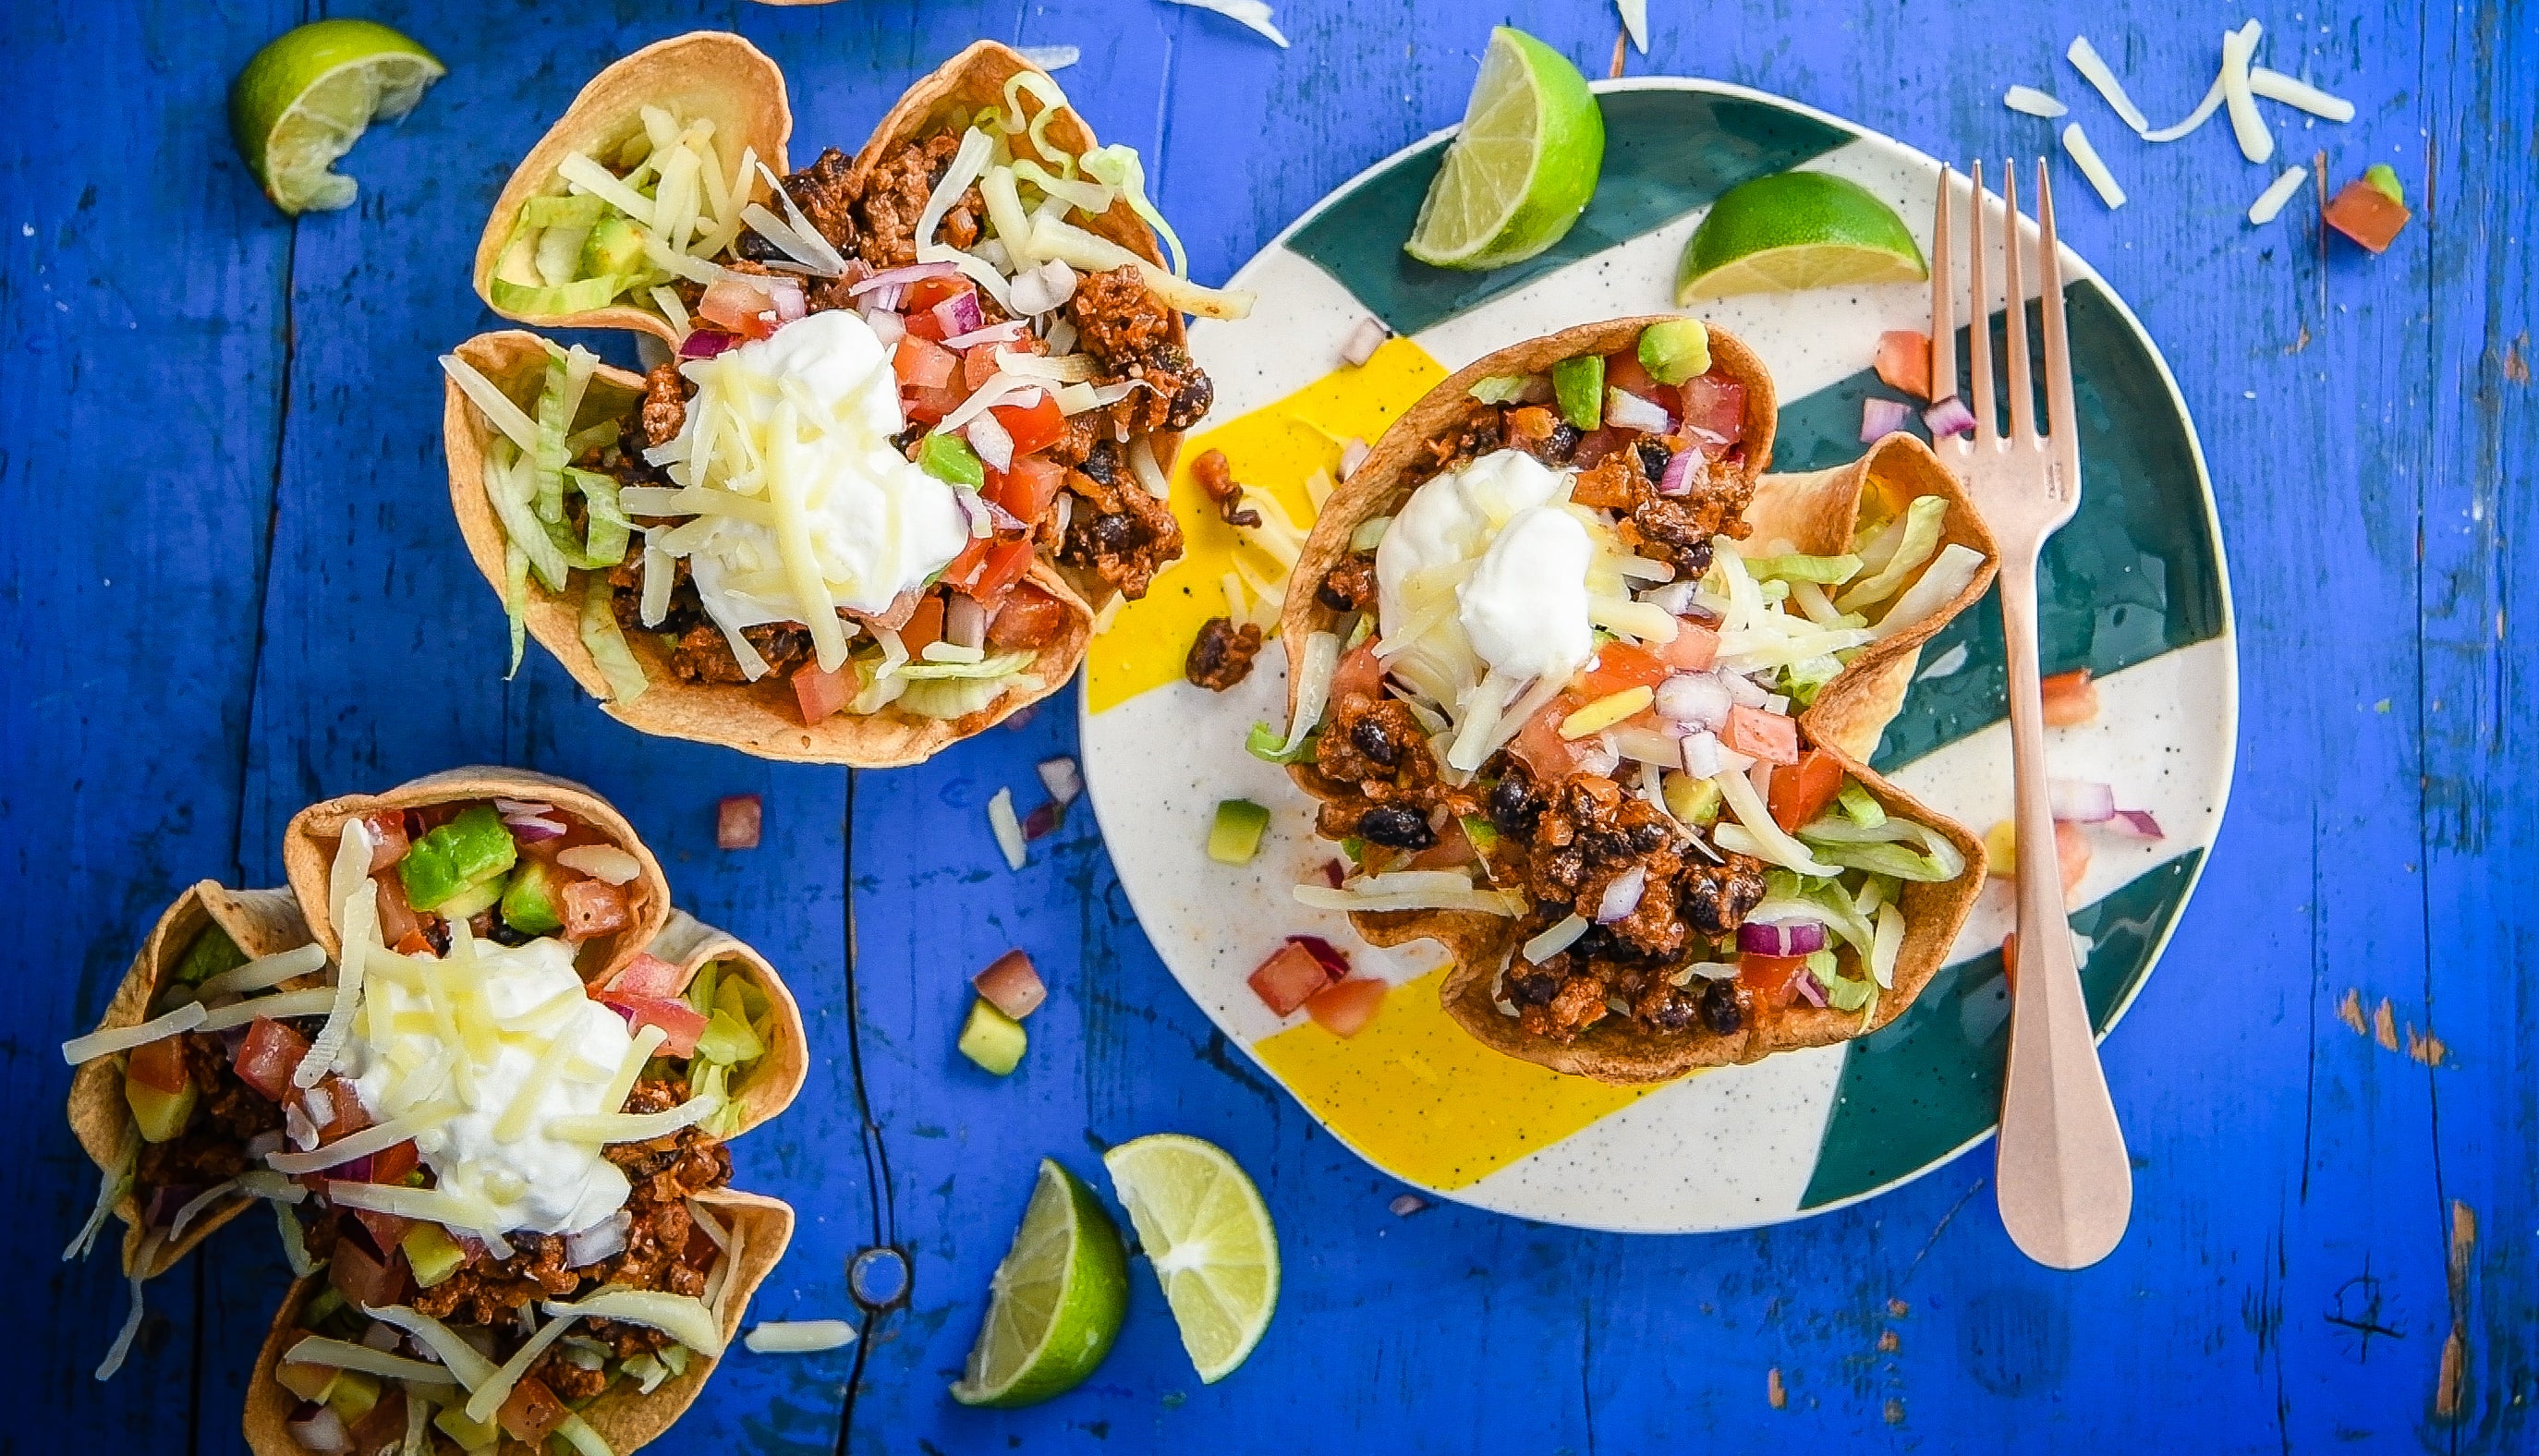 Beef tacos on plates alongside fresh tortillas.